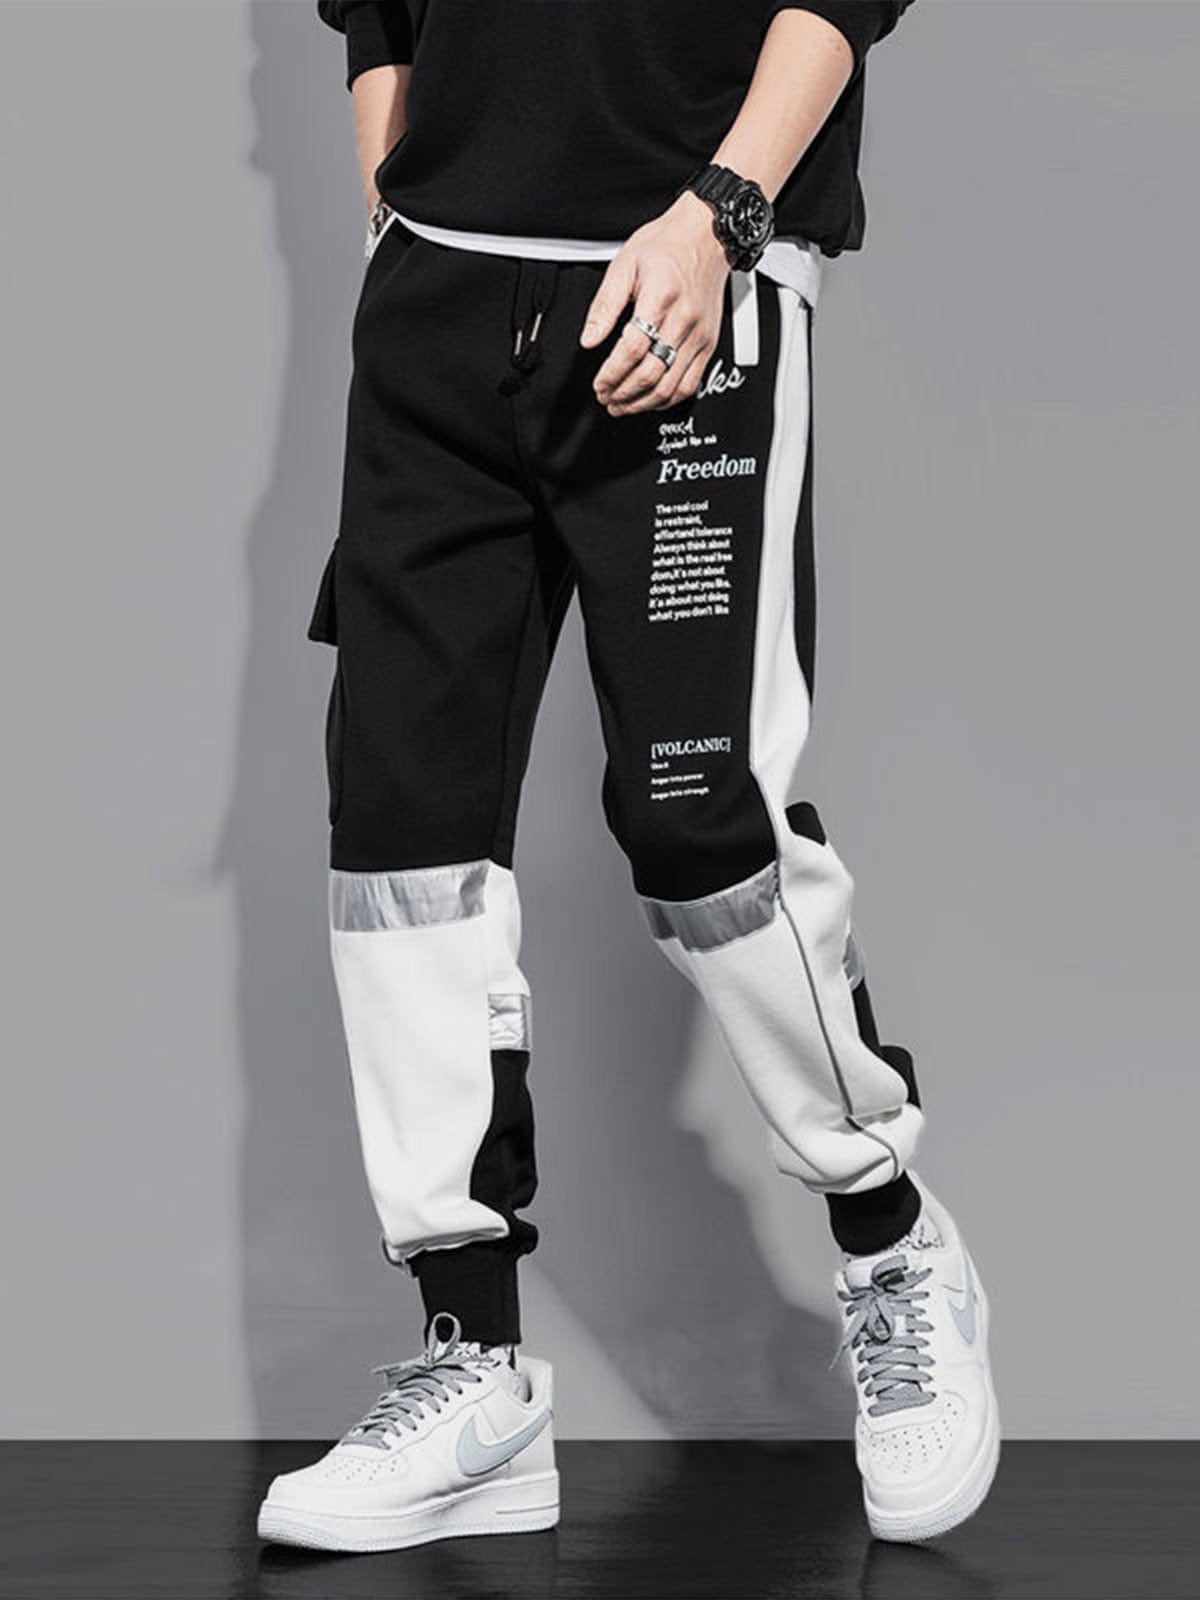 Patchwork Reflective Pants Streetwear Brand Techwear Combat Tactical YUGEN THEORY